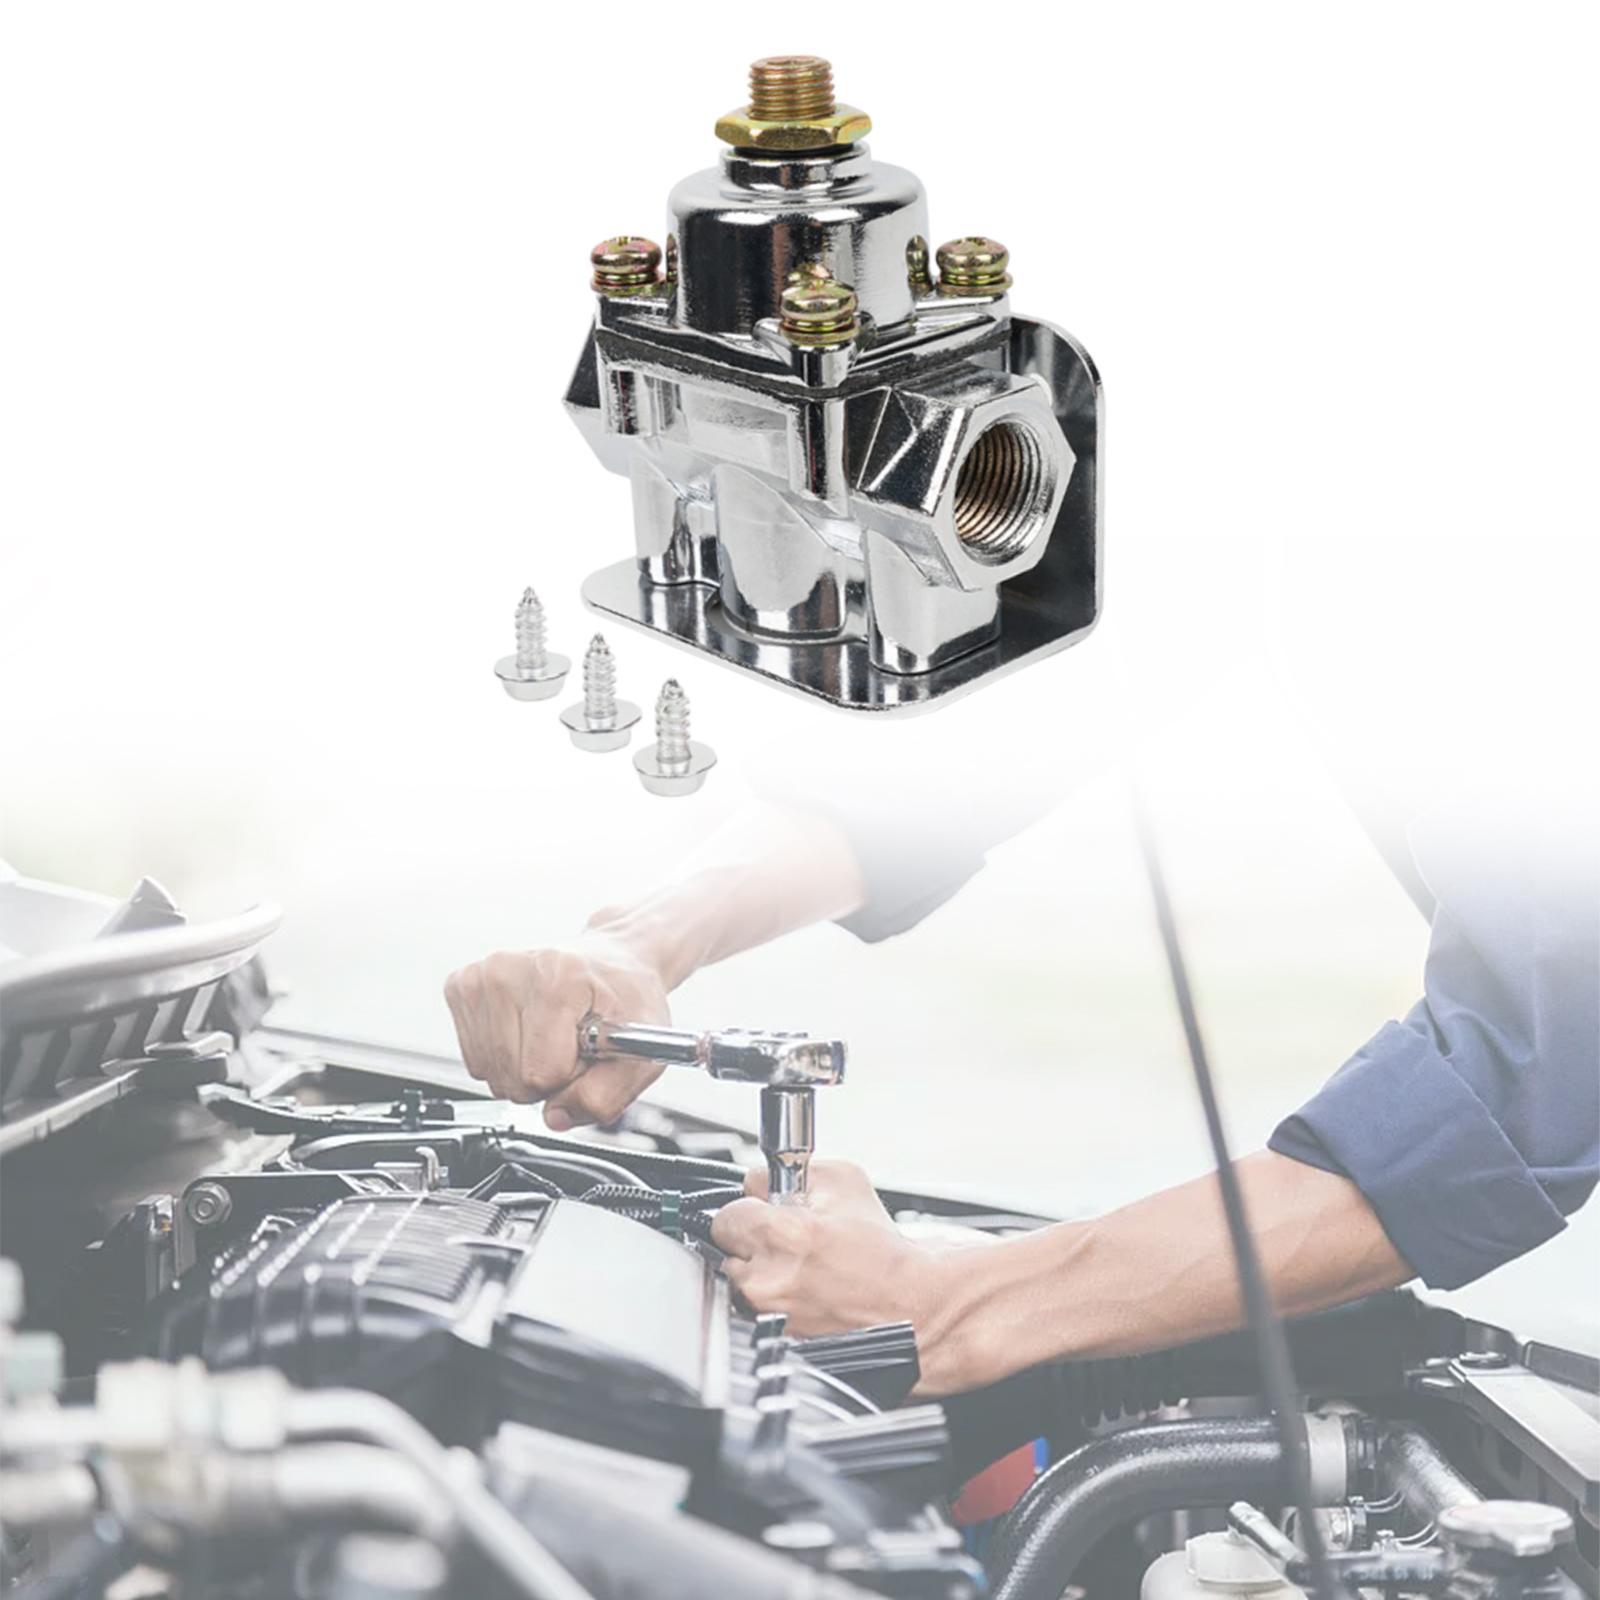 Carbureted Fuel Pressure Regulator Replacement Parts /8" NPT Ports Adjustable Fuel Regulator for Carburetors Engine Durable Parts